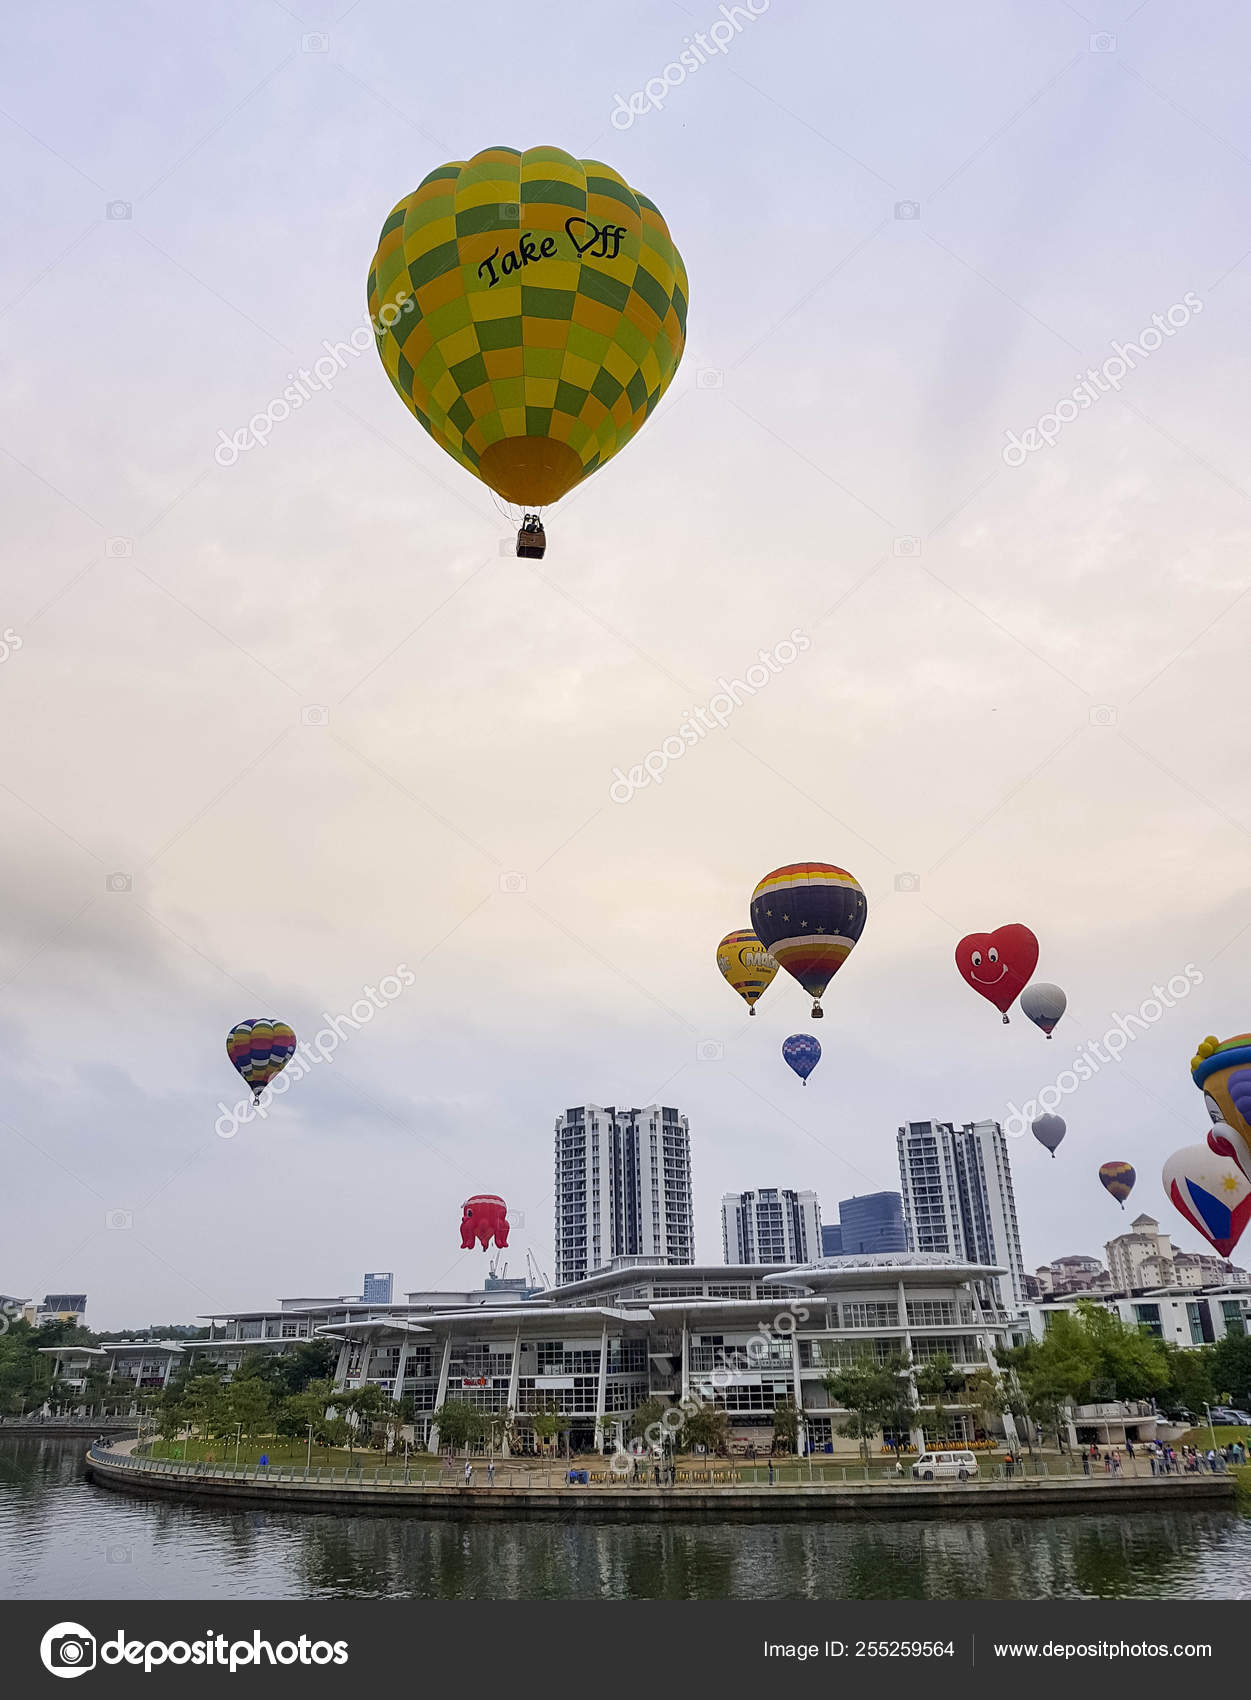 hot air balloon putrajaya 2019